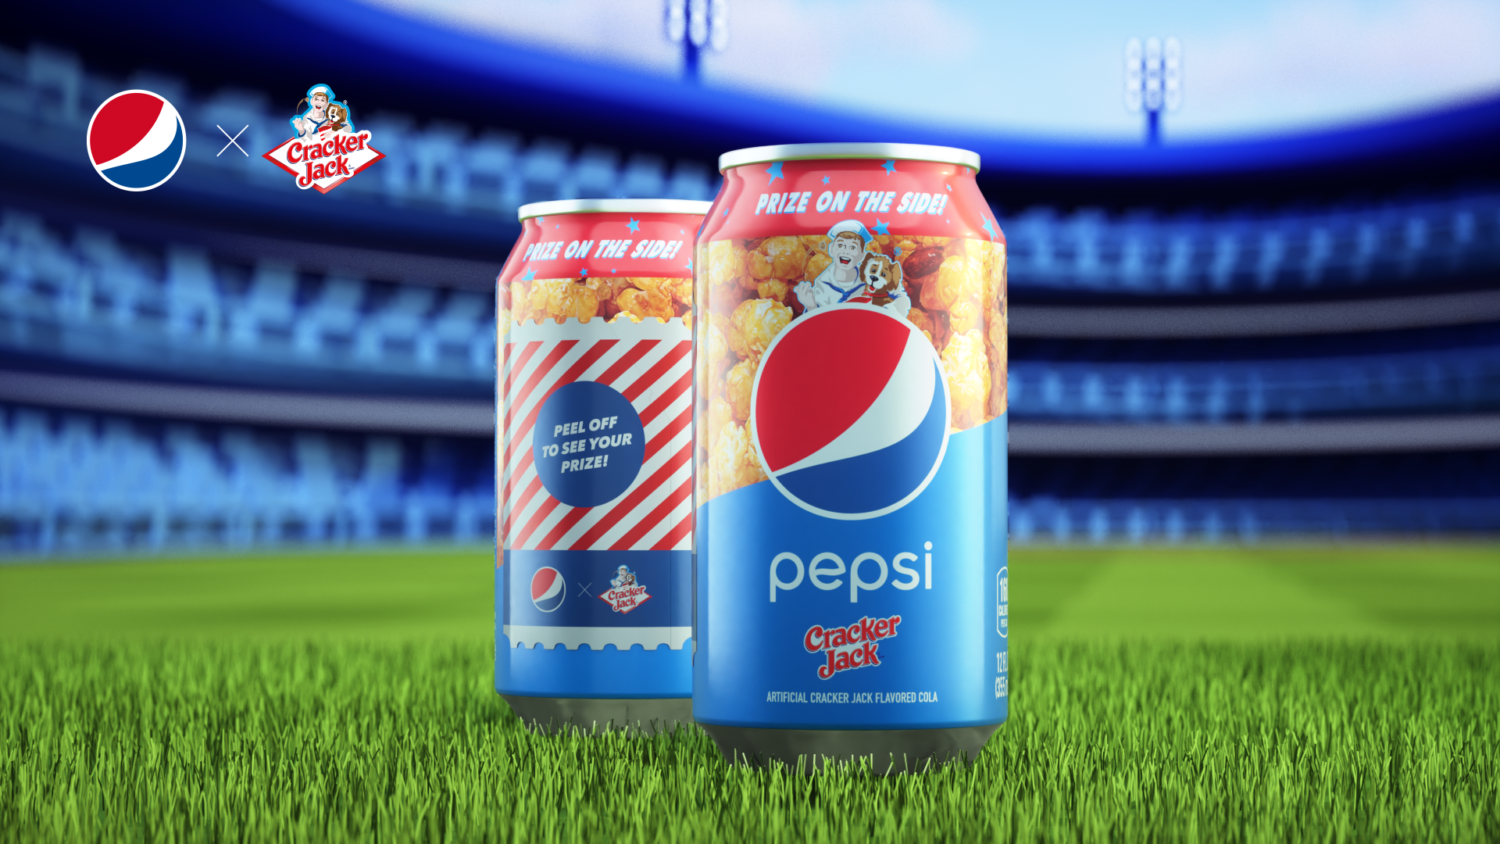 Pepsi x Cracker Jack Cans on baseball field